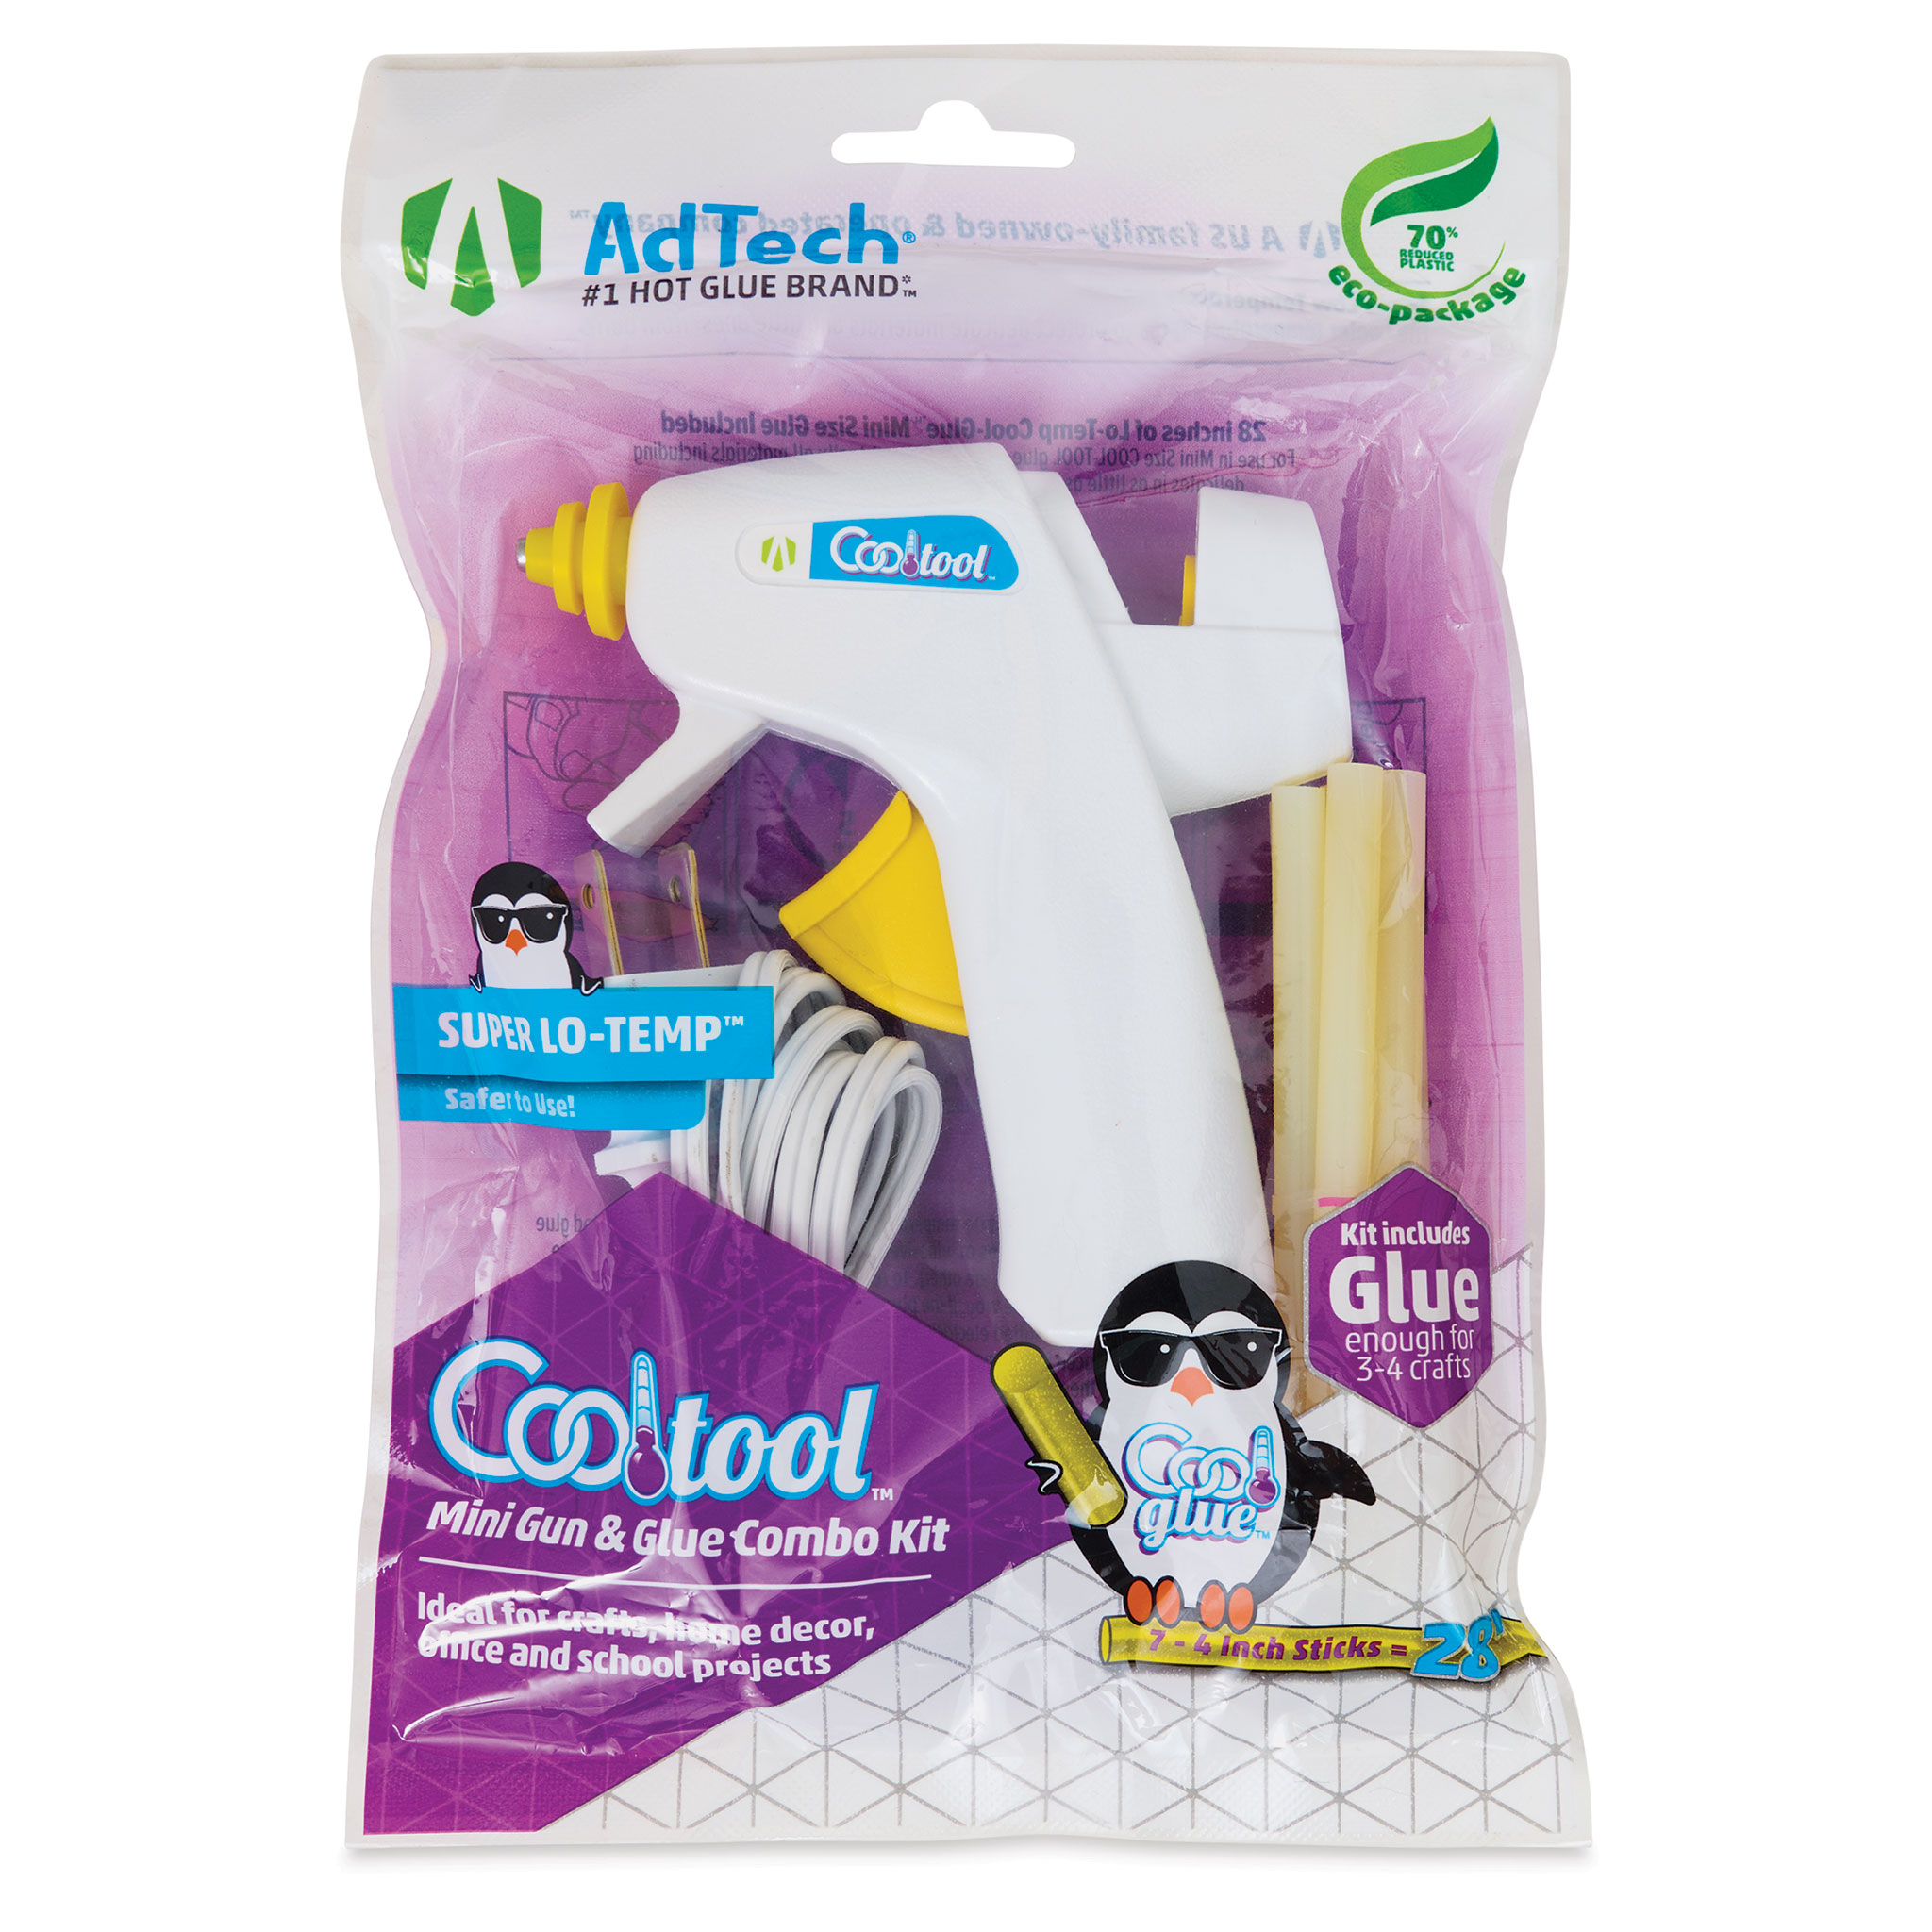 AdTech Ultra Low-Temp Cool Tool, Mini Hot Glue Gun for Safe Crafting, Children and Kids